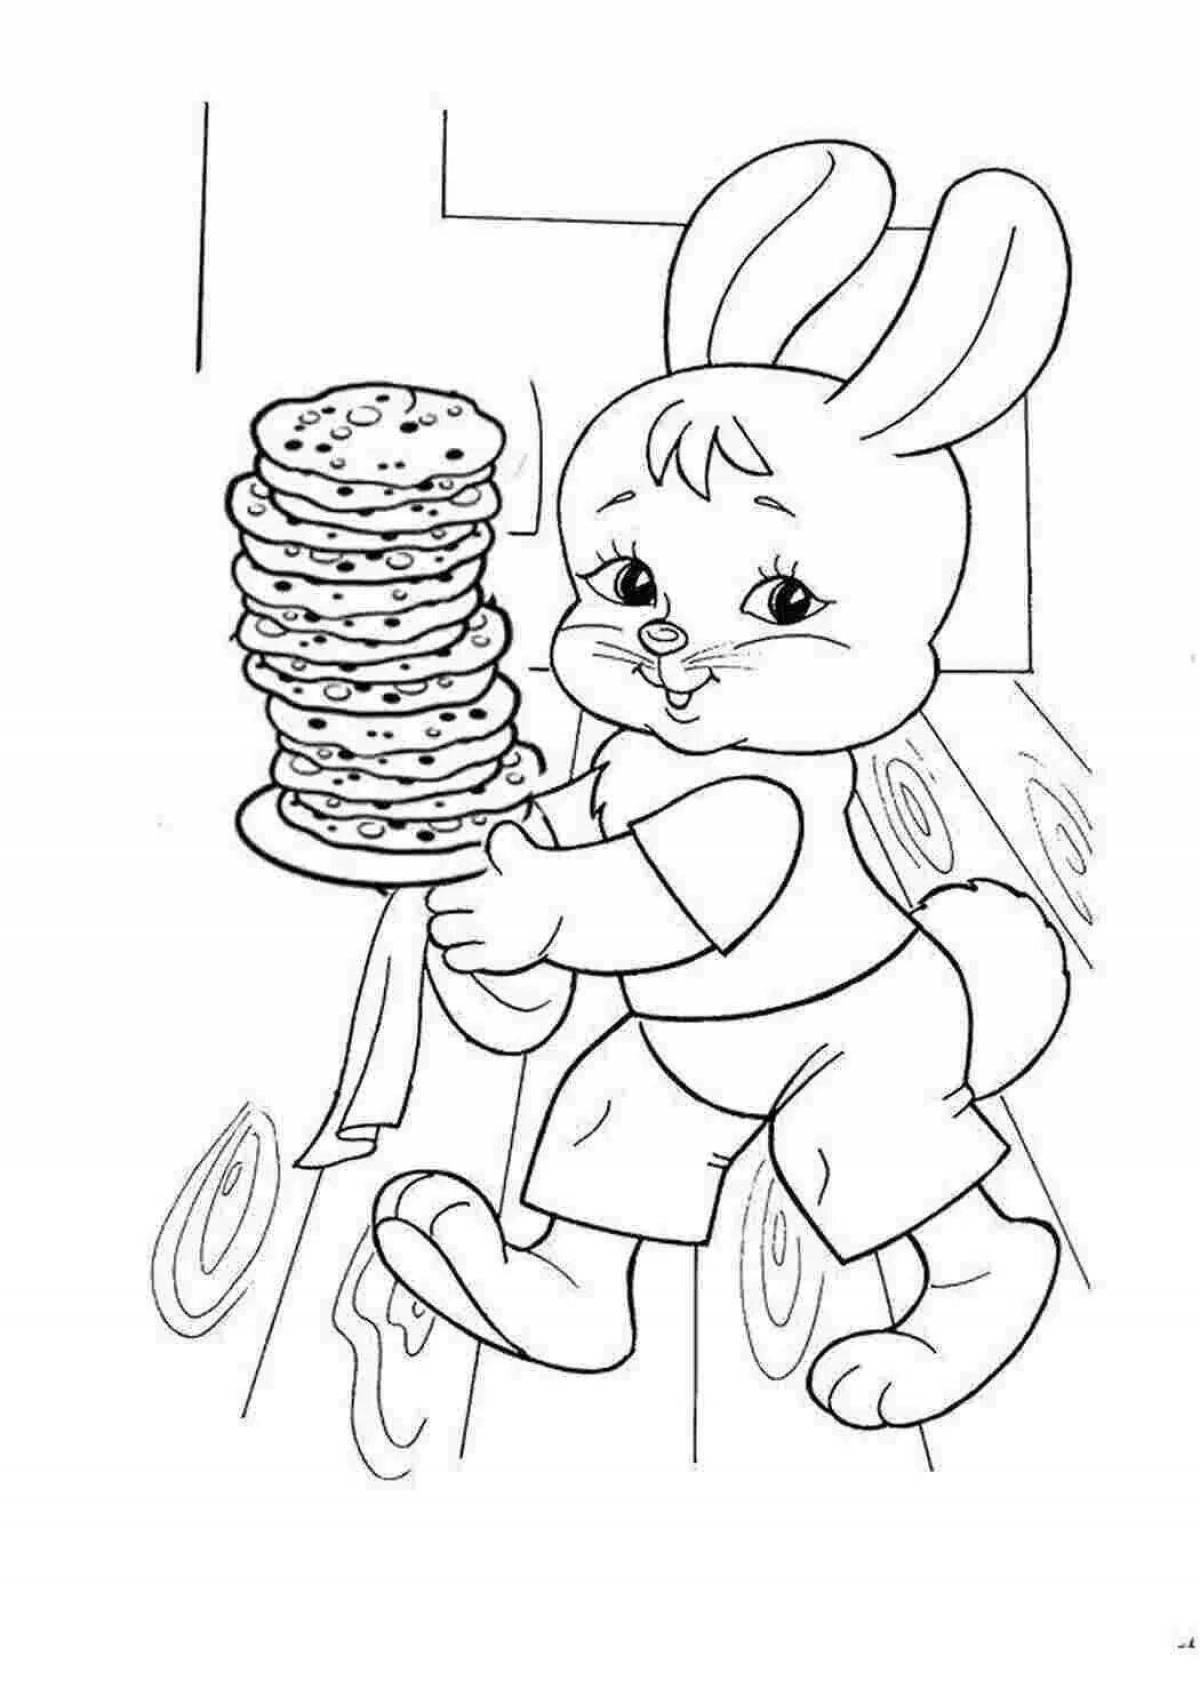 Shrovetide pancake coloring page